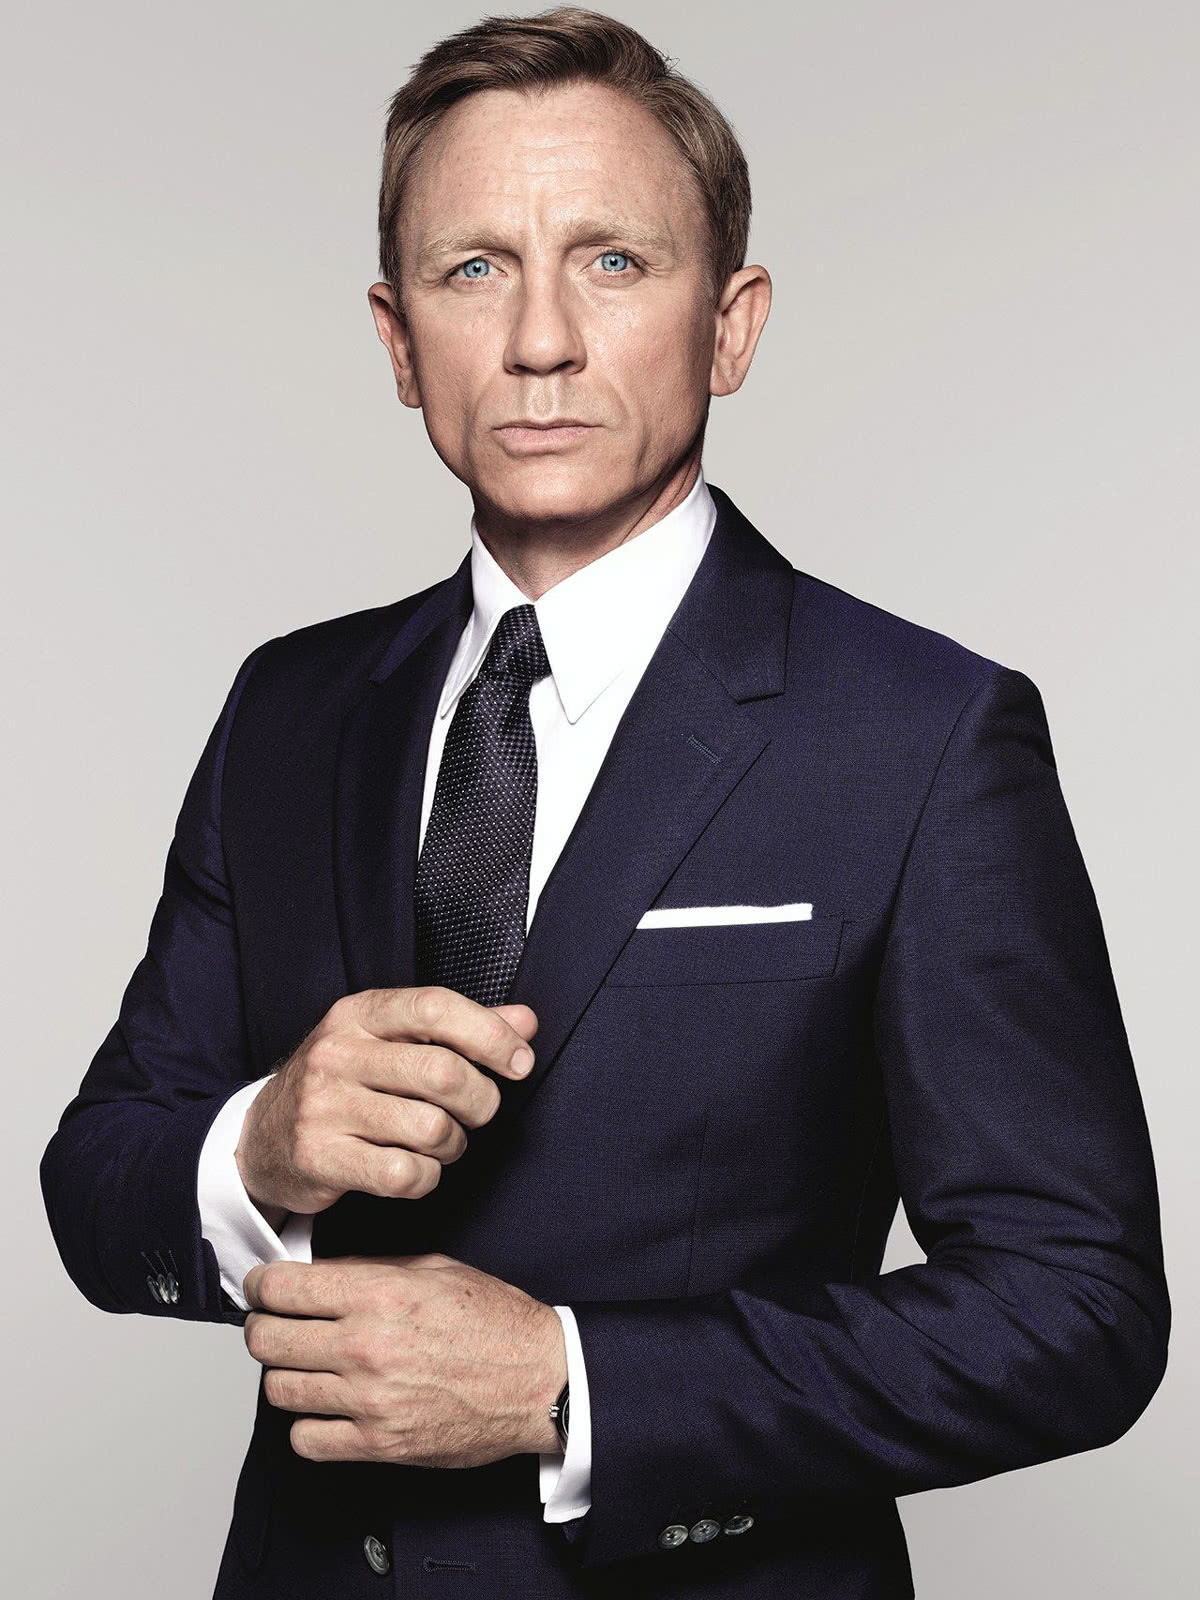 business professional dress code men James Bond suit style - Luxe Digital